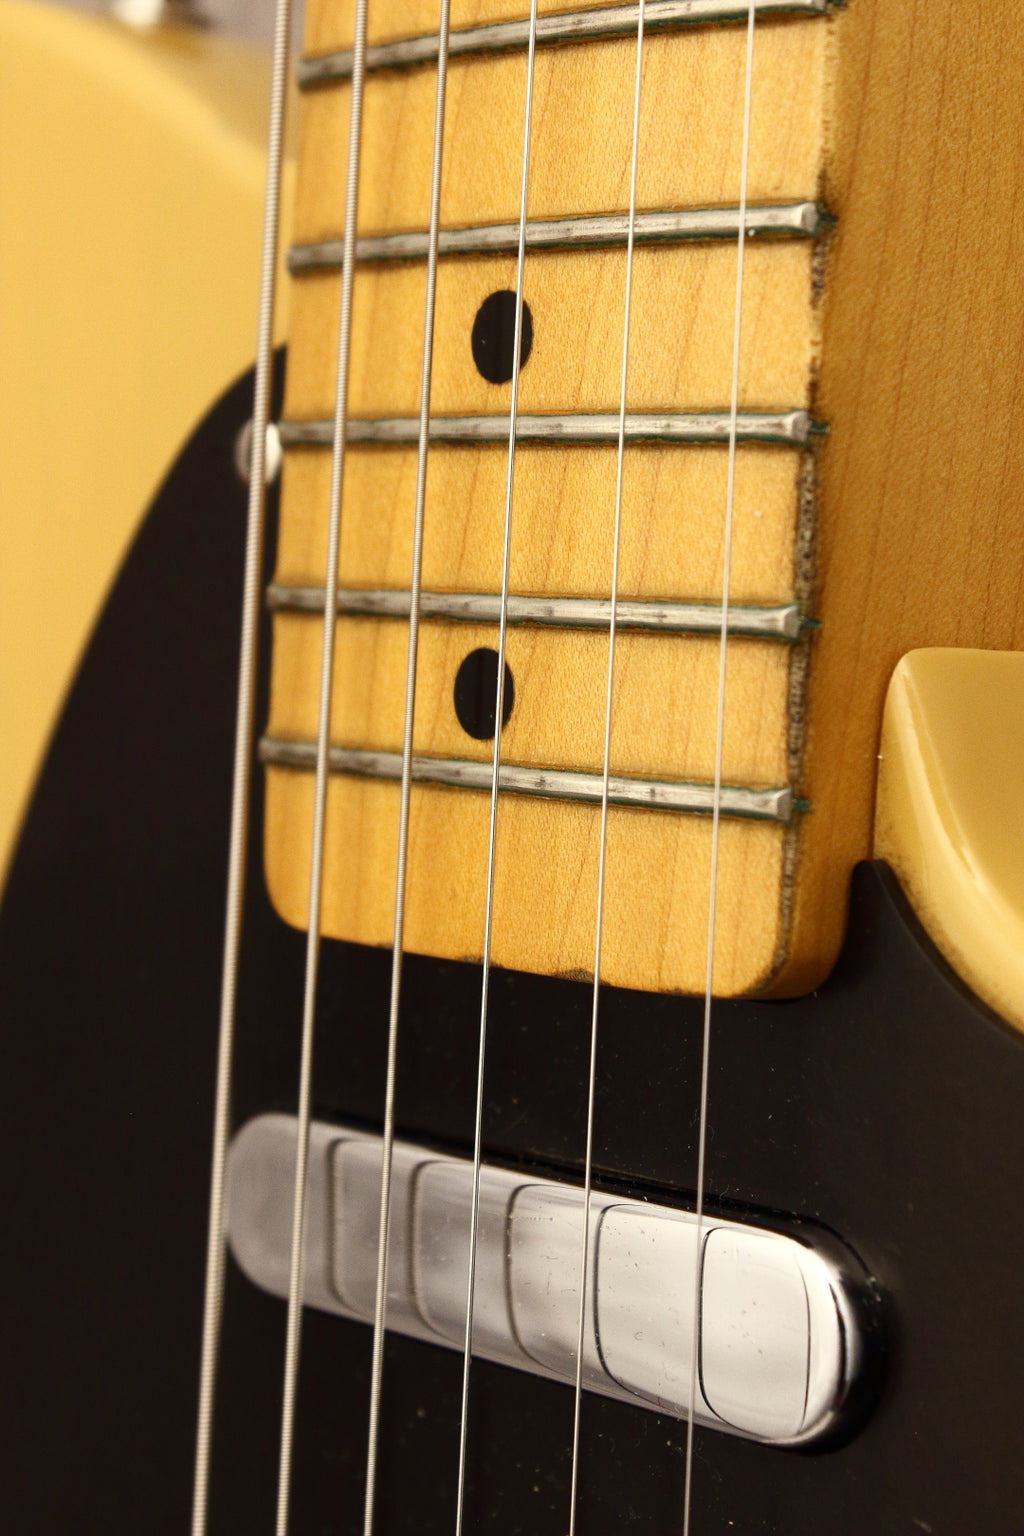 Fender American Vintage '52 Telecaster Butterscotch 2011